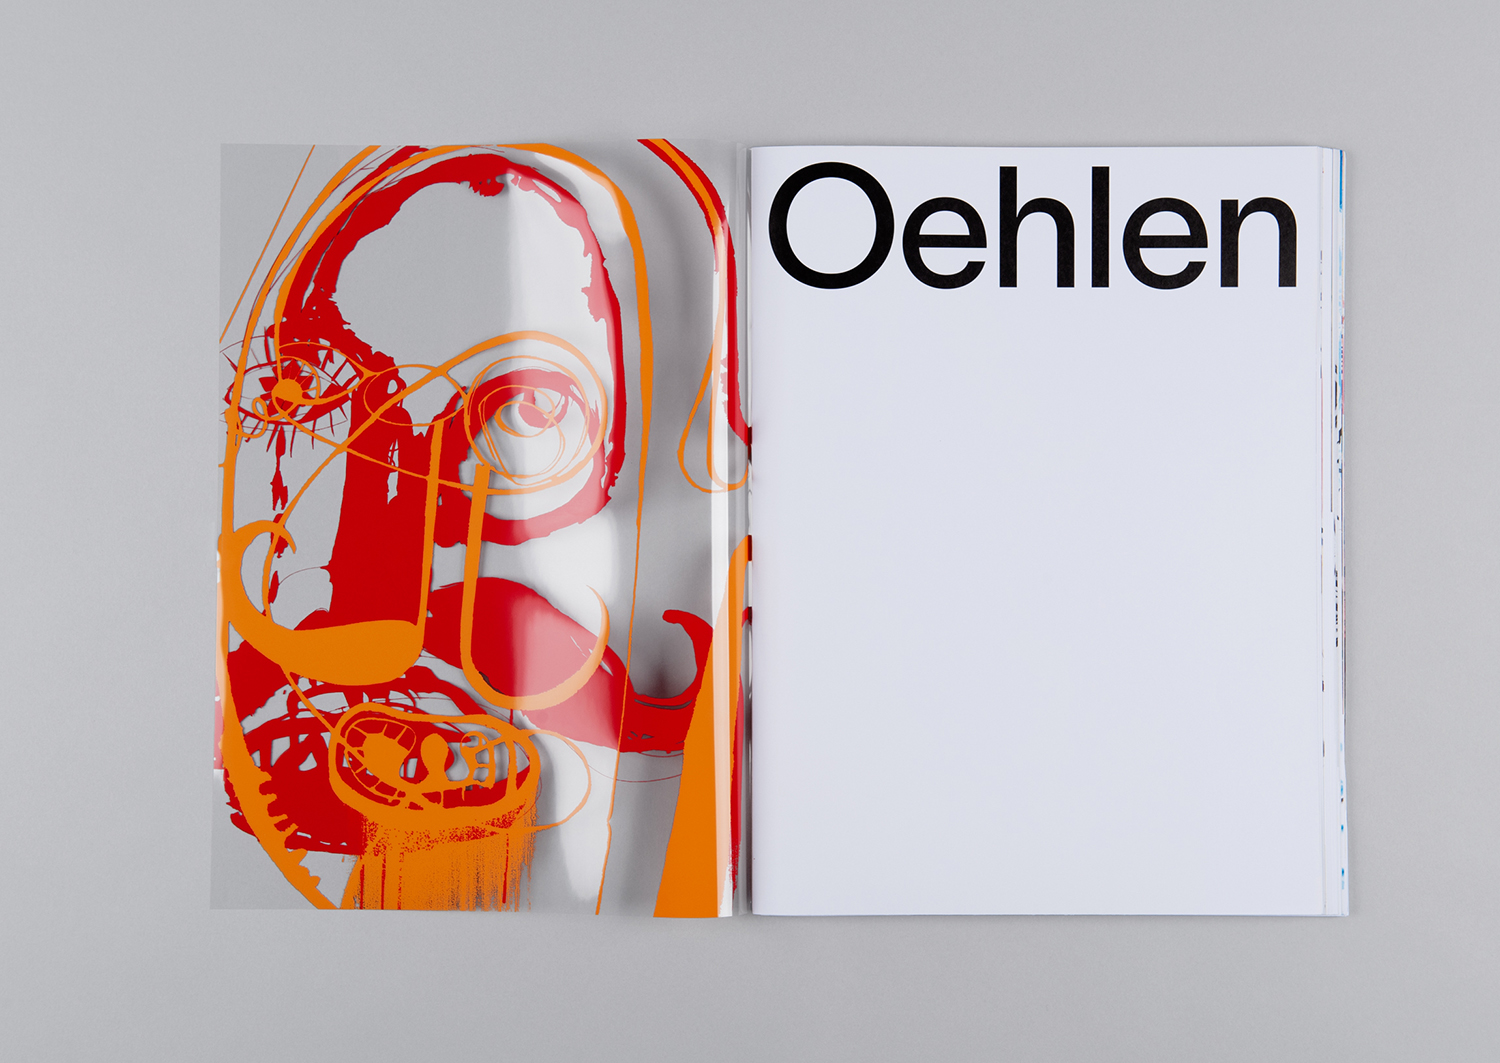 Albert Oehlen Book designed by Zak Group